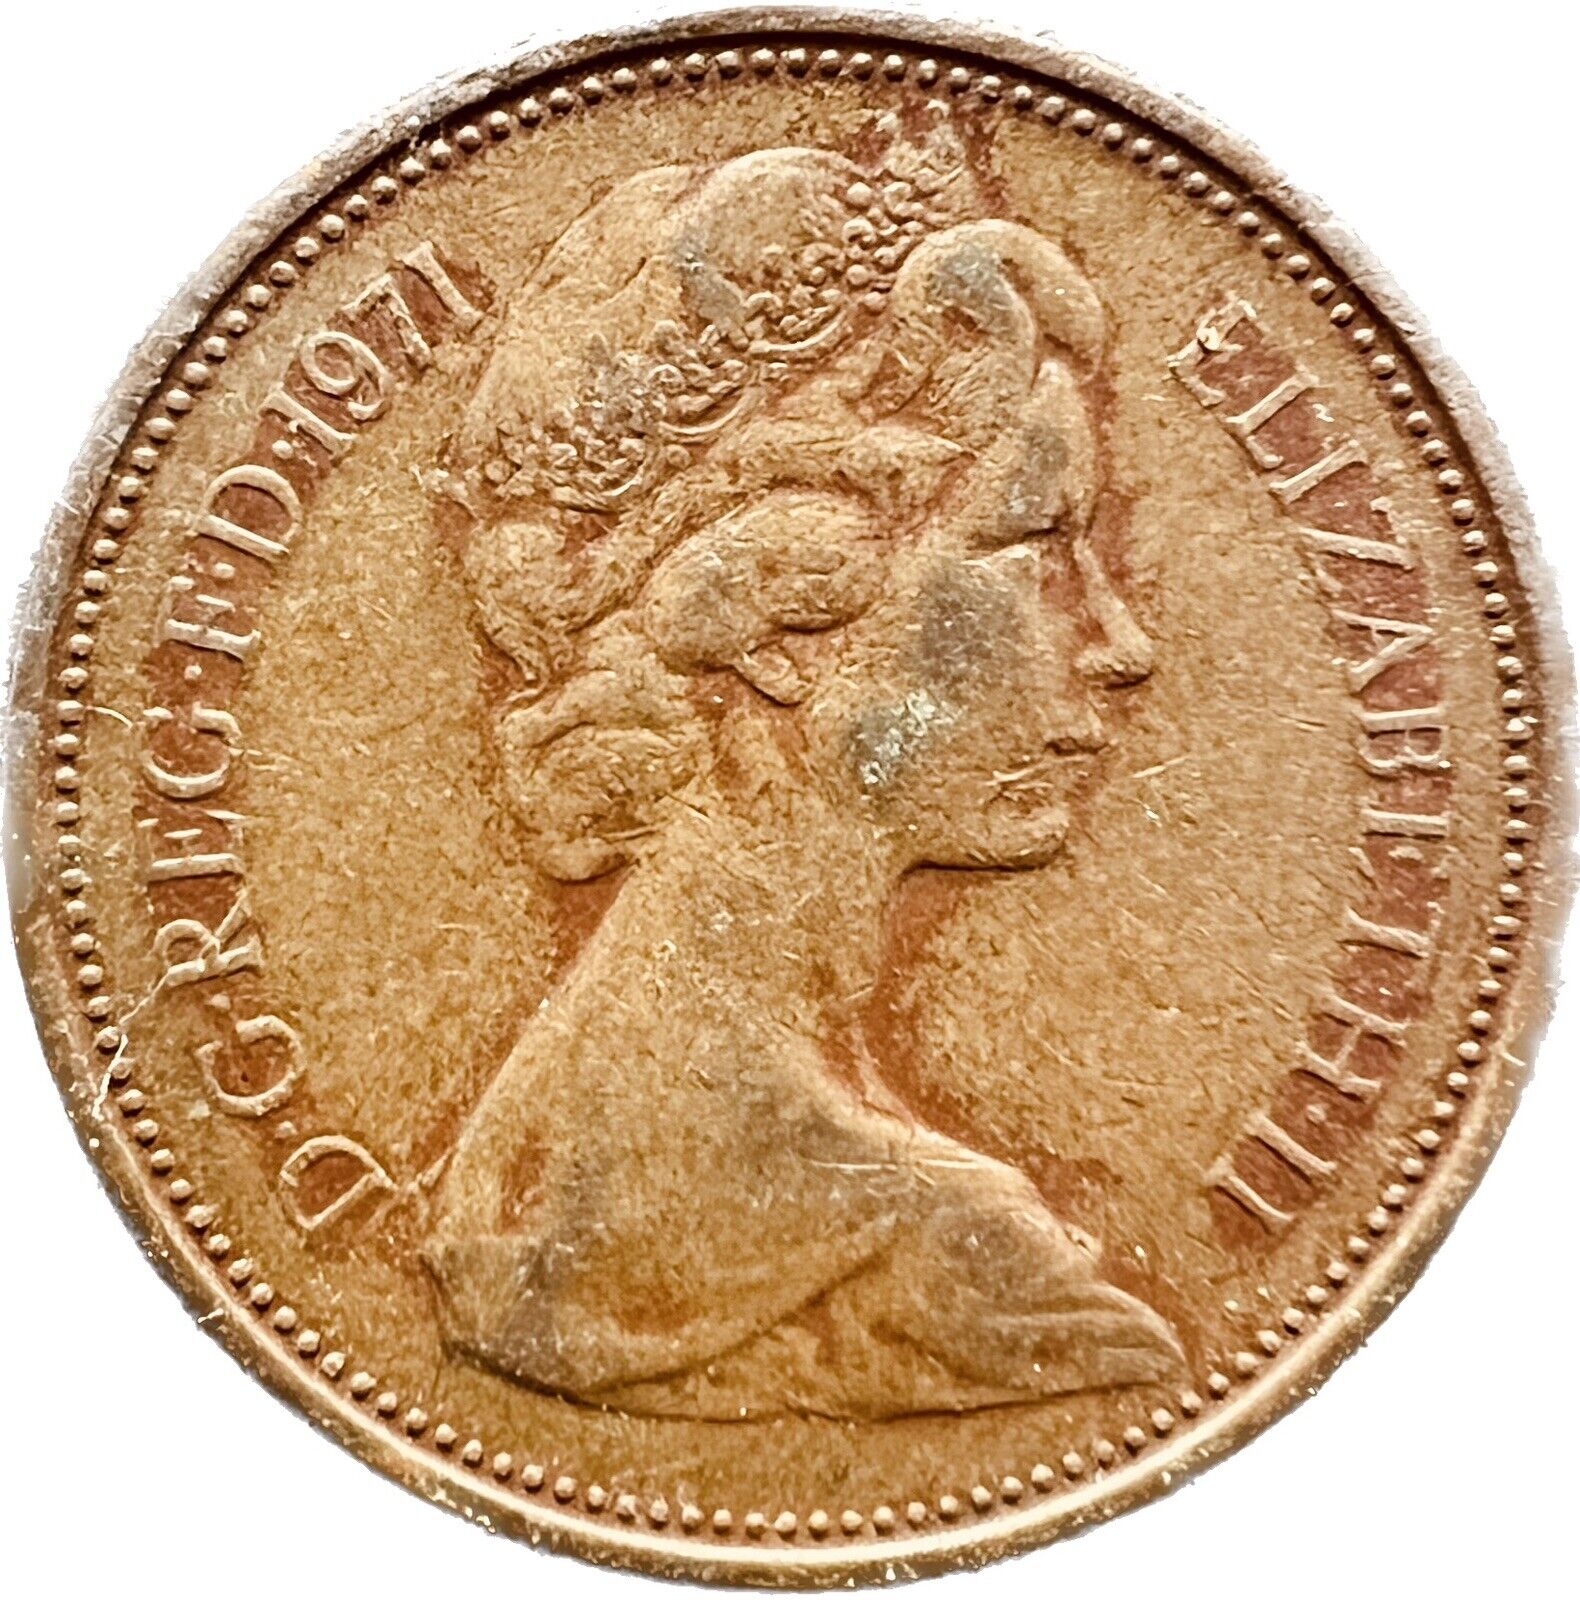 1971 2 New Pence: British Coin Queen Elizabeth Ii D G Reg F D